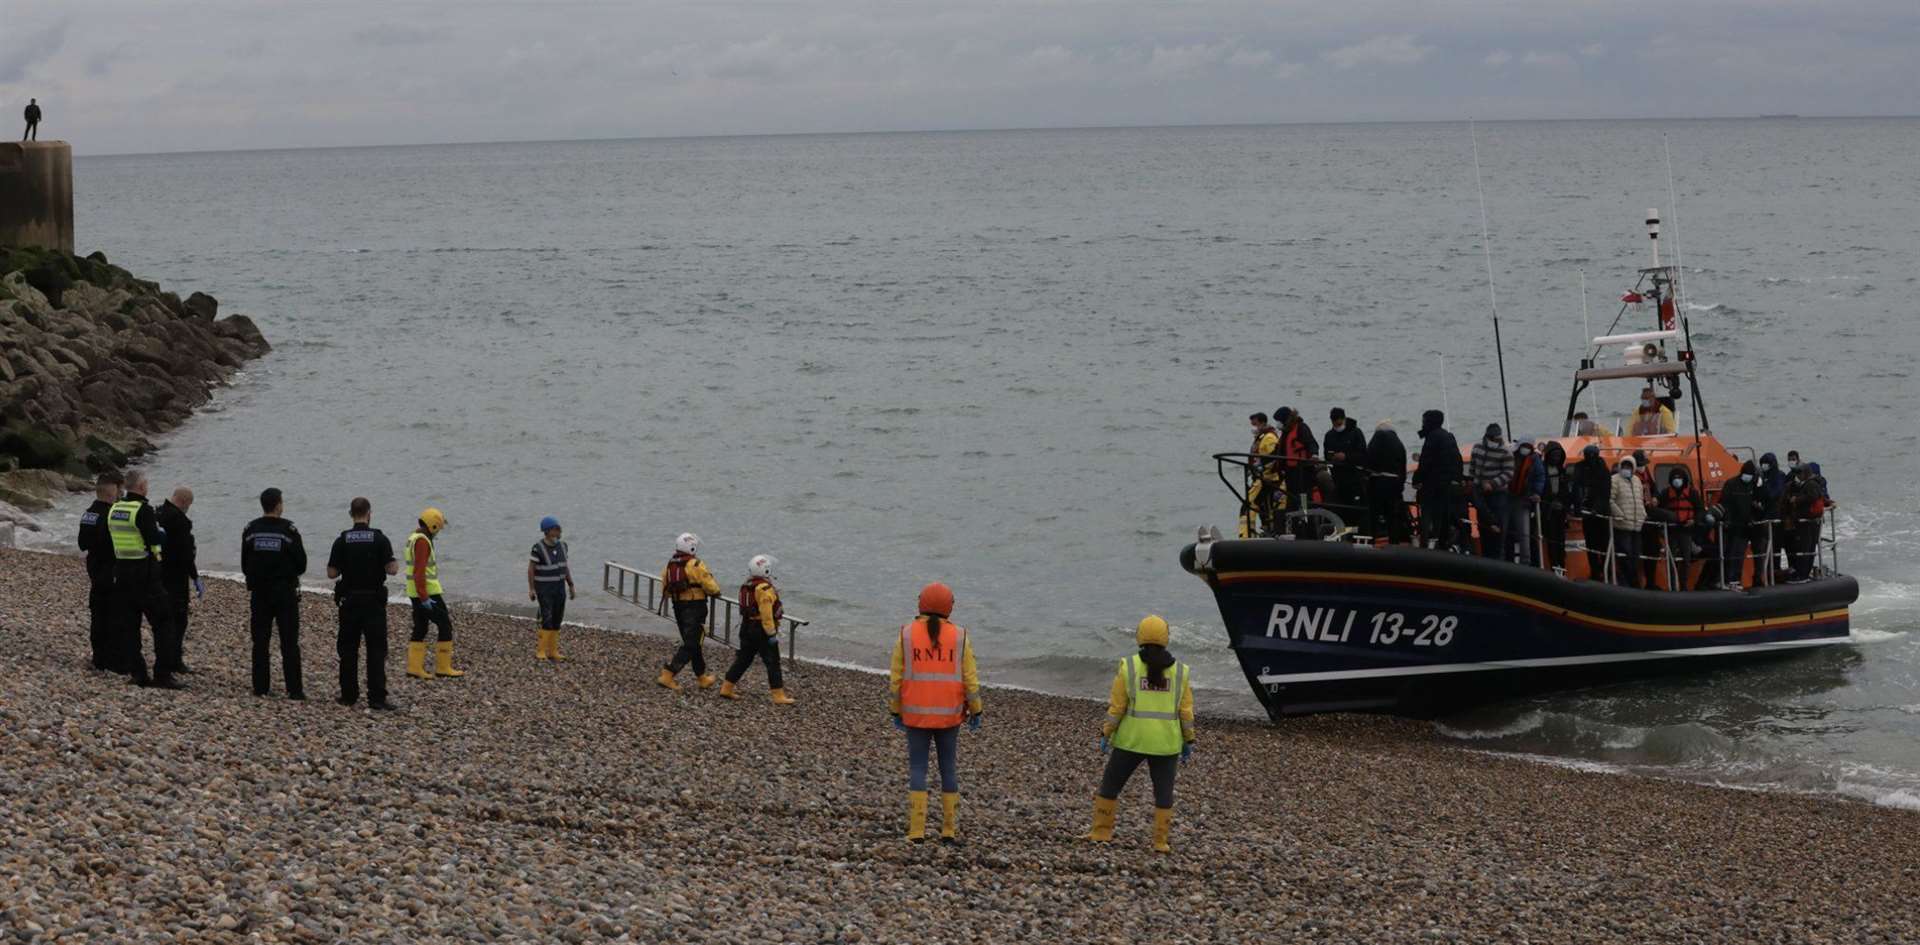 Asylum seekers arrive in Kent Picture: UKNIP